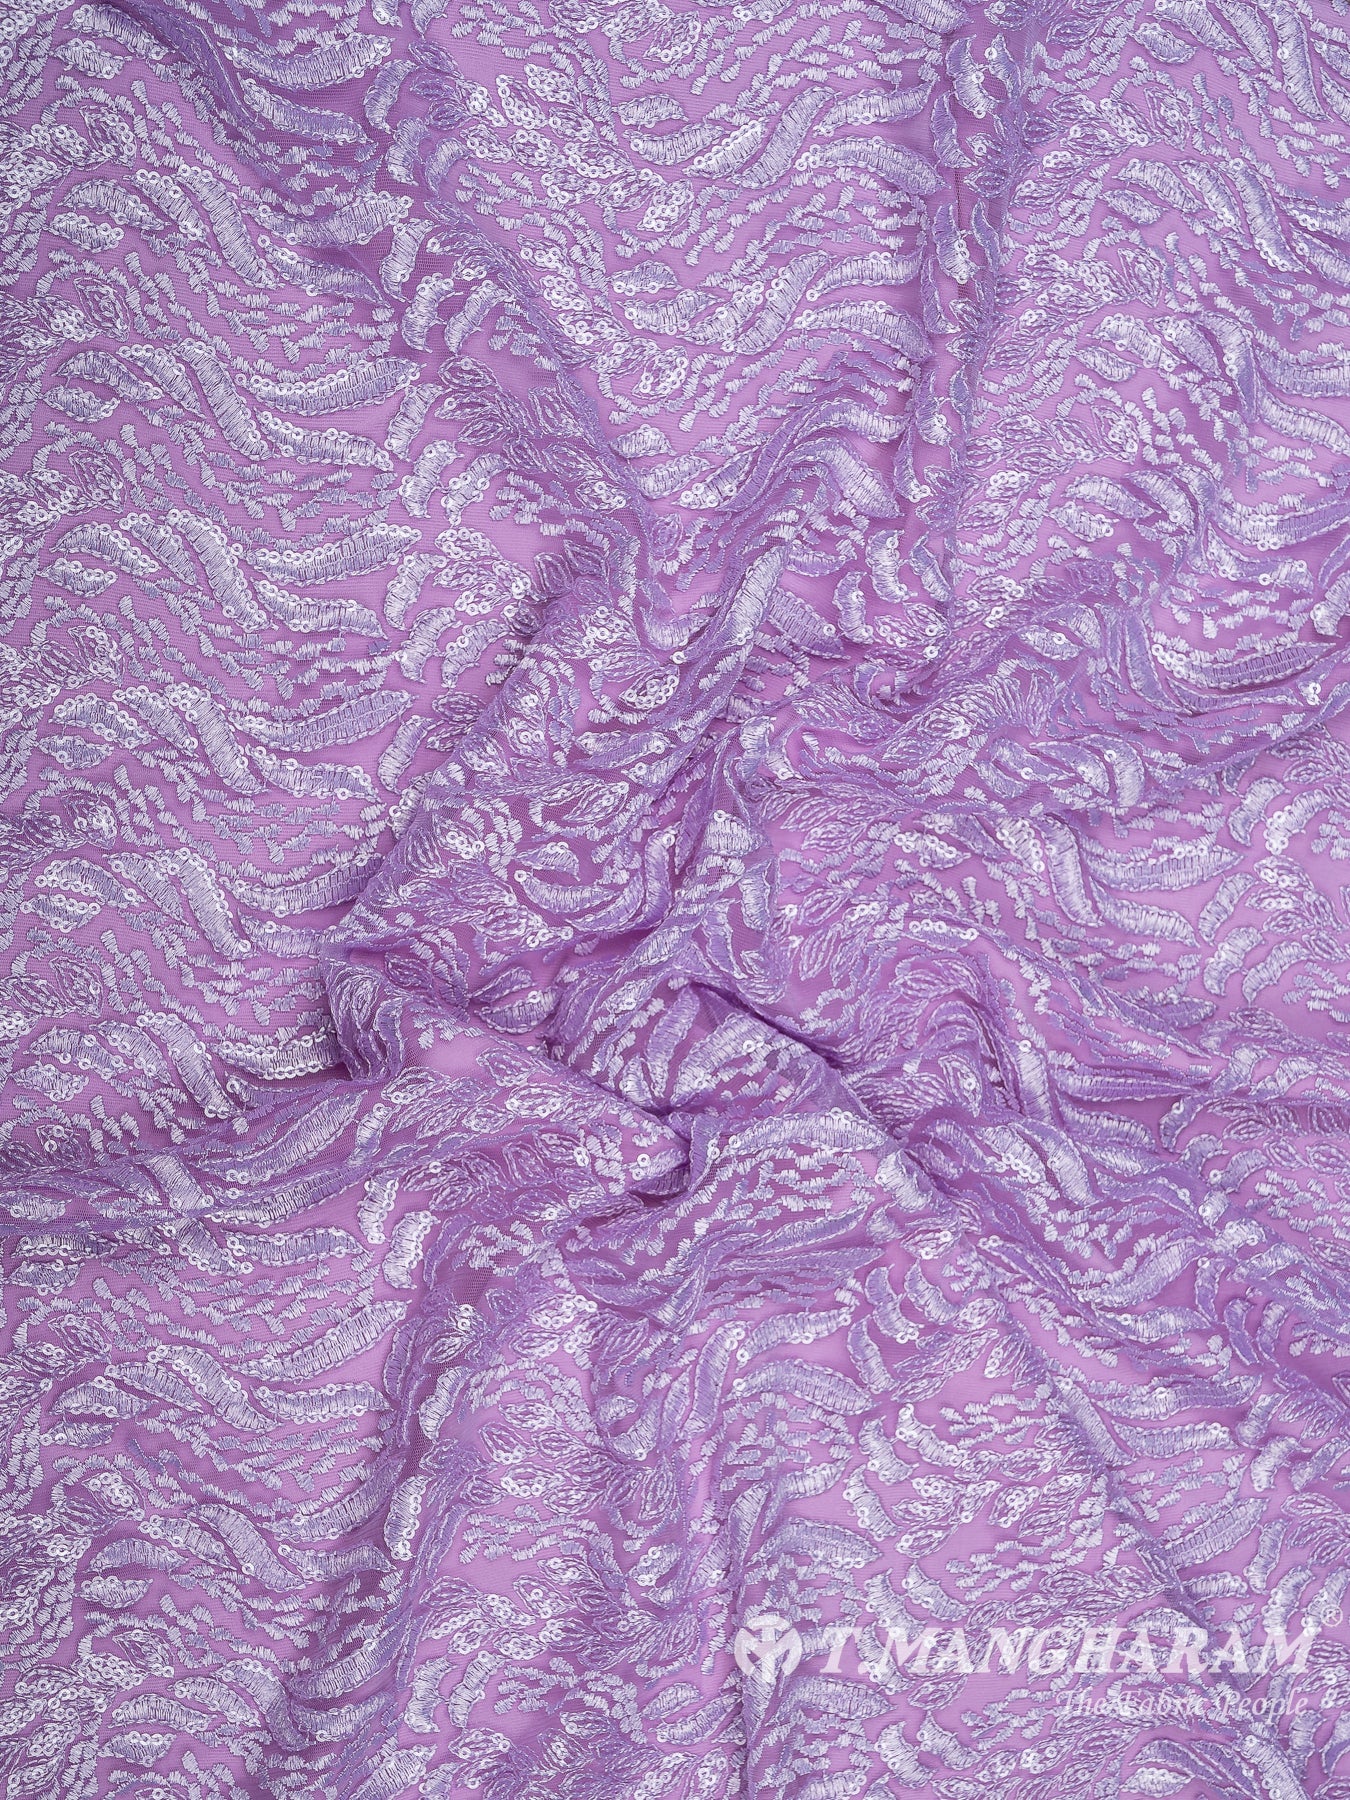 Violet Fancy Net Fabric - EB5804 view-4